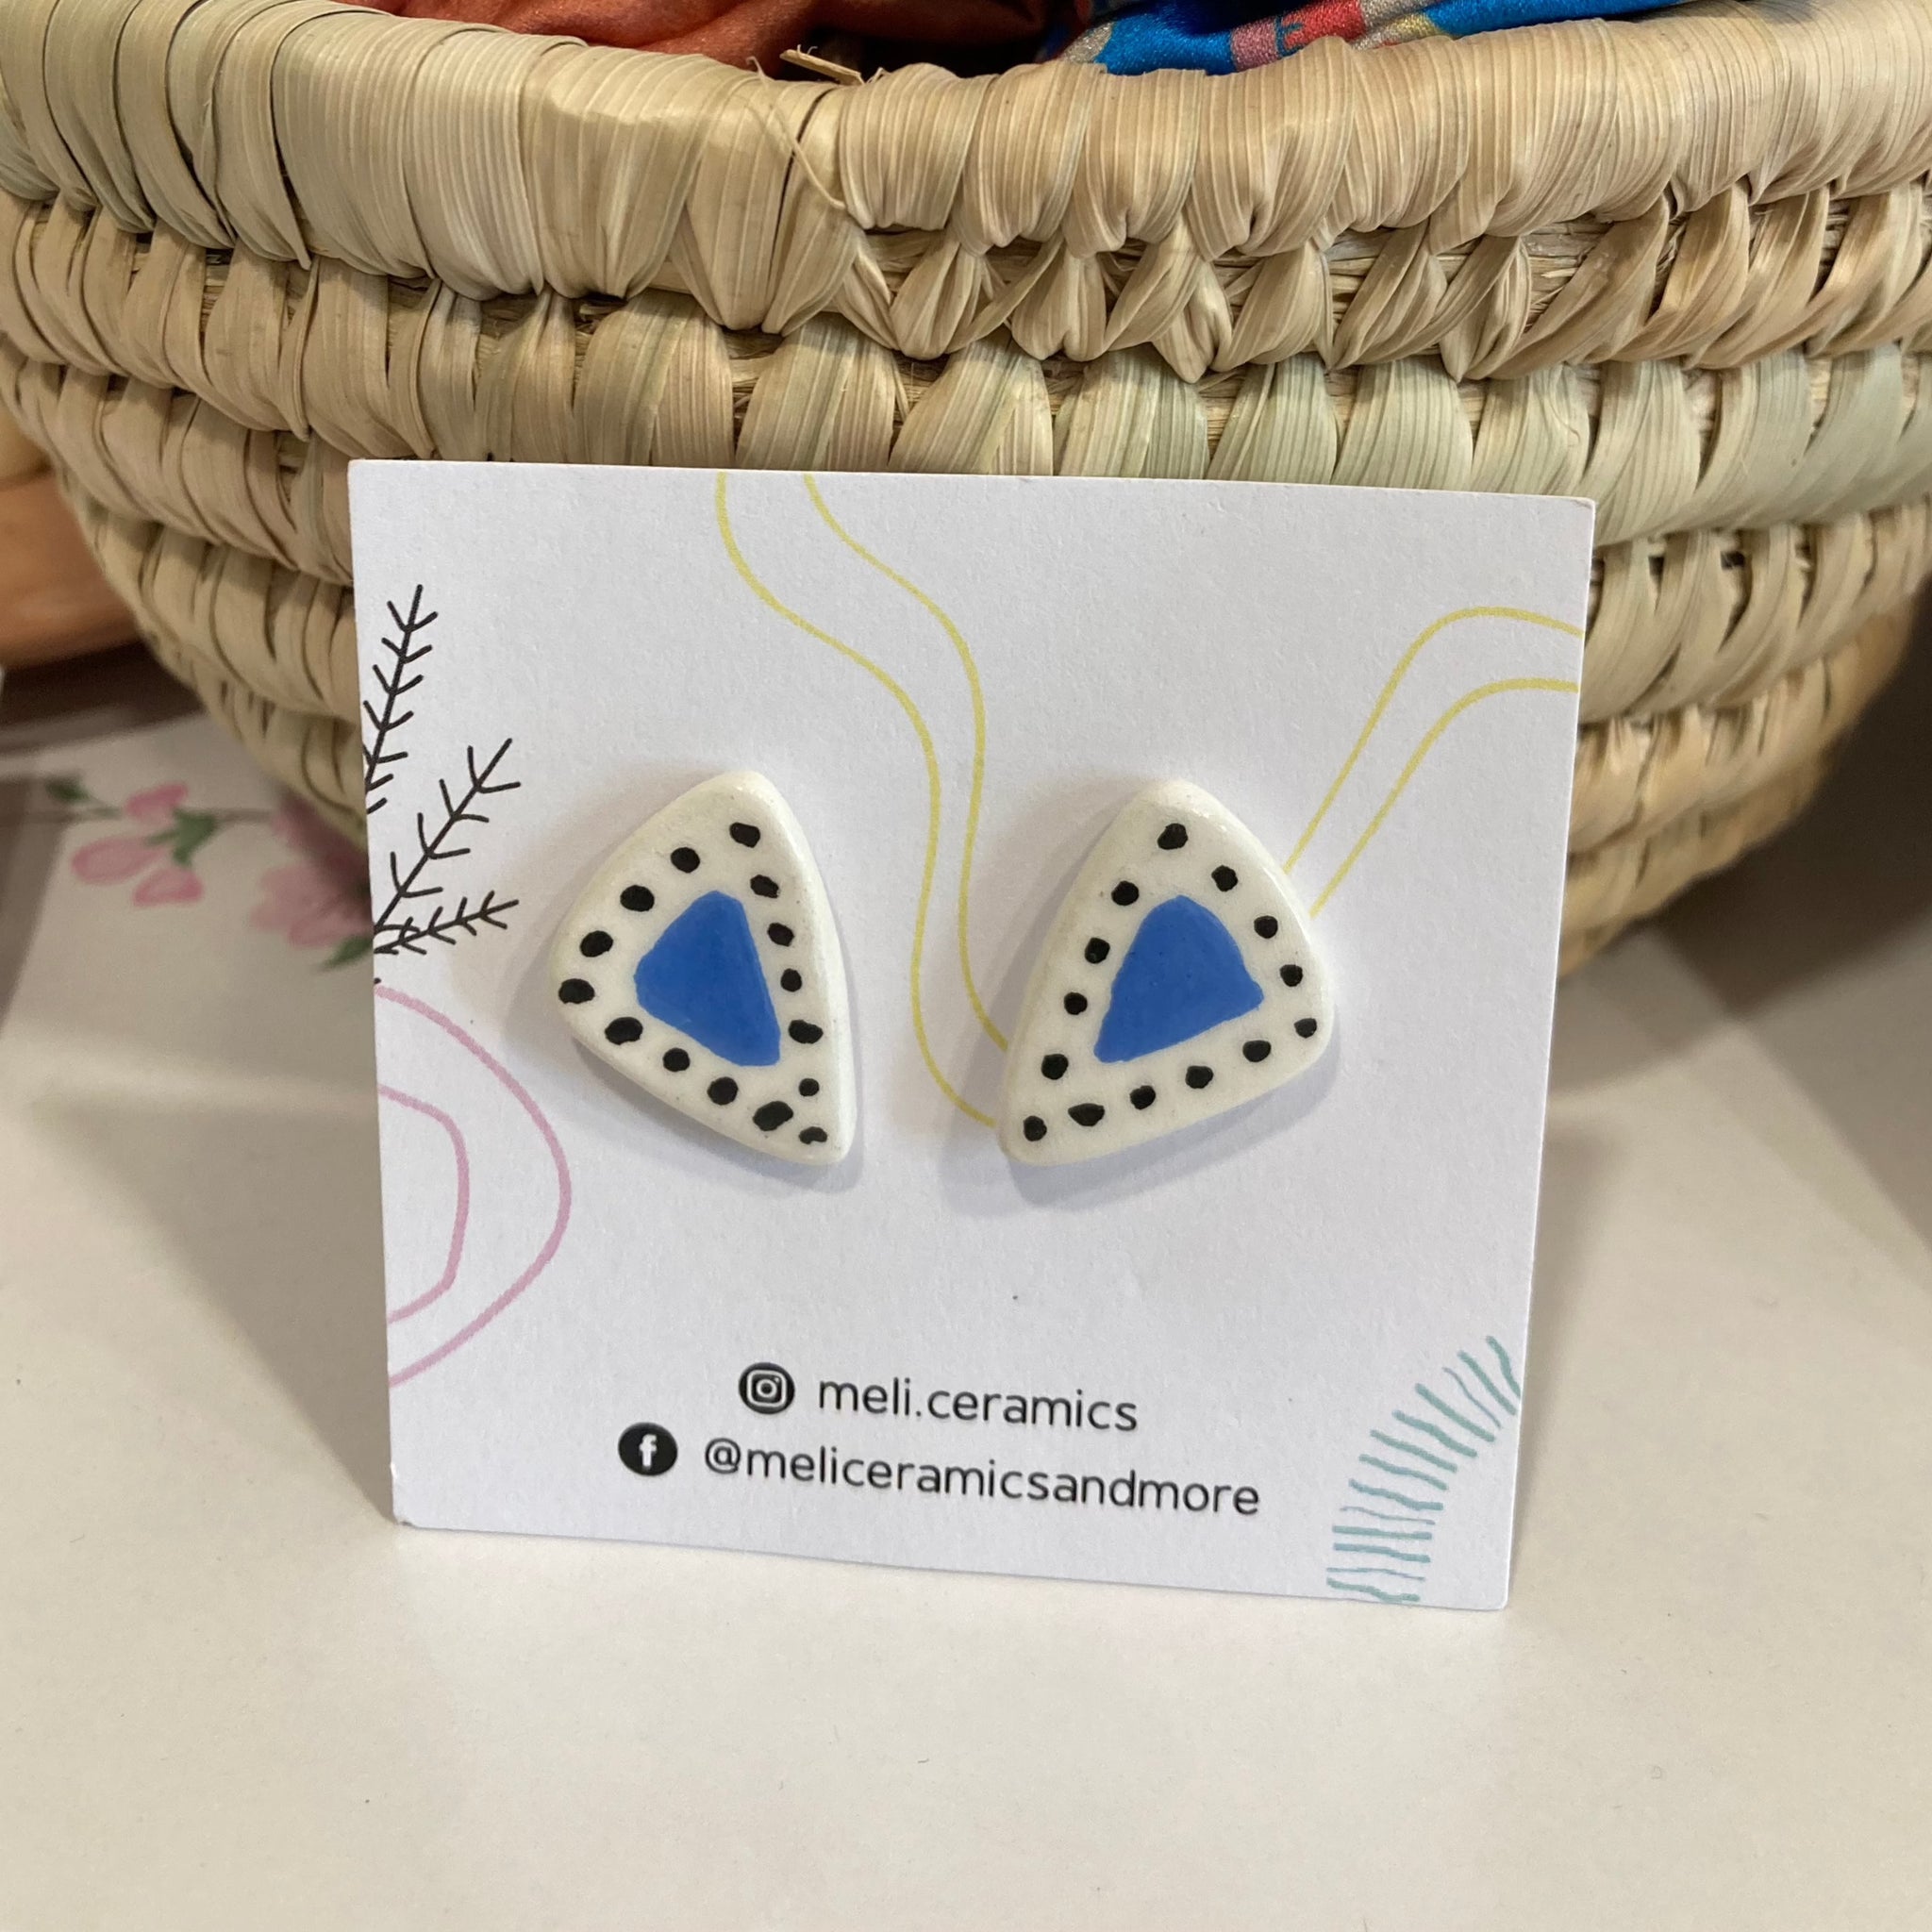 Ceramic stud earrings - Black dots & blue / Κεραμικά καρφωτά σκουλαρίκια - Μαύρες κουκκίδες & μπλε